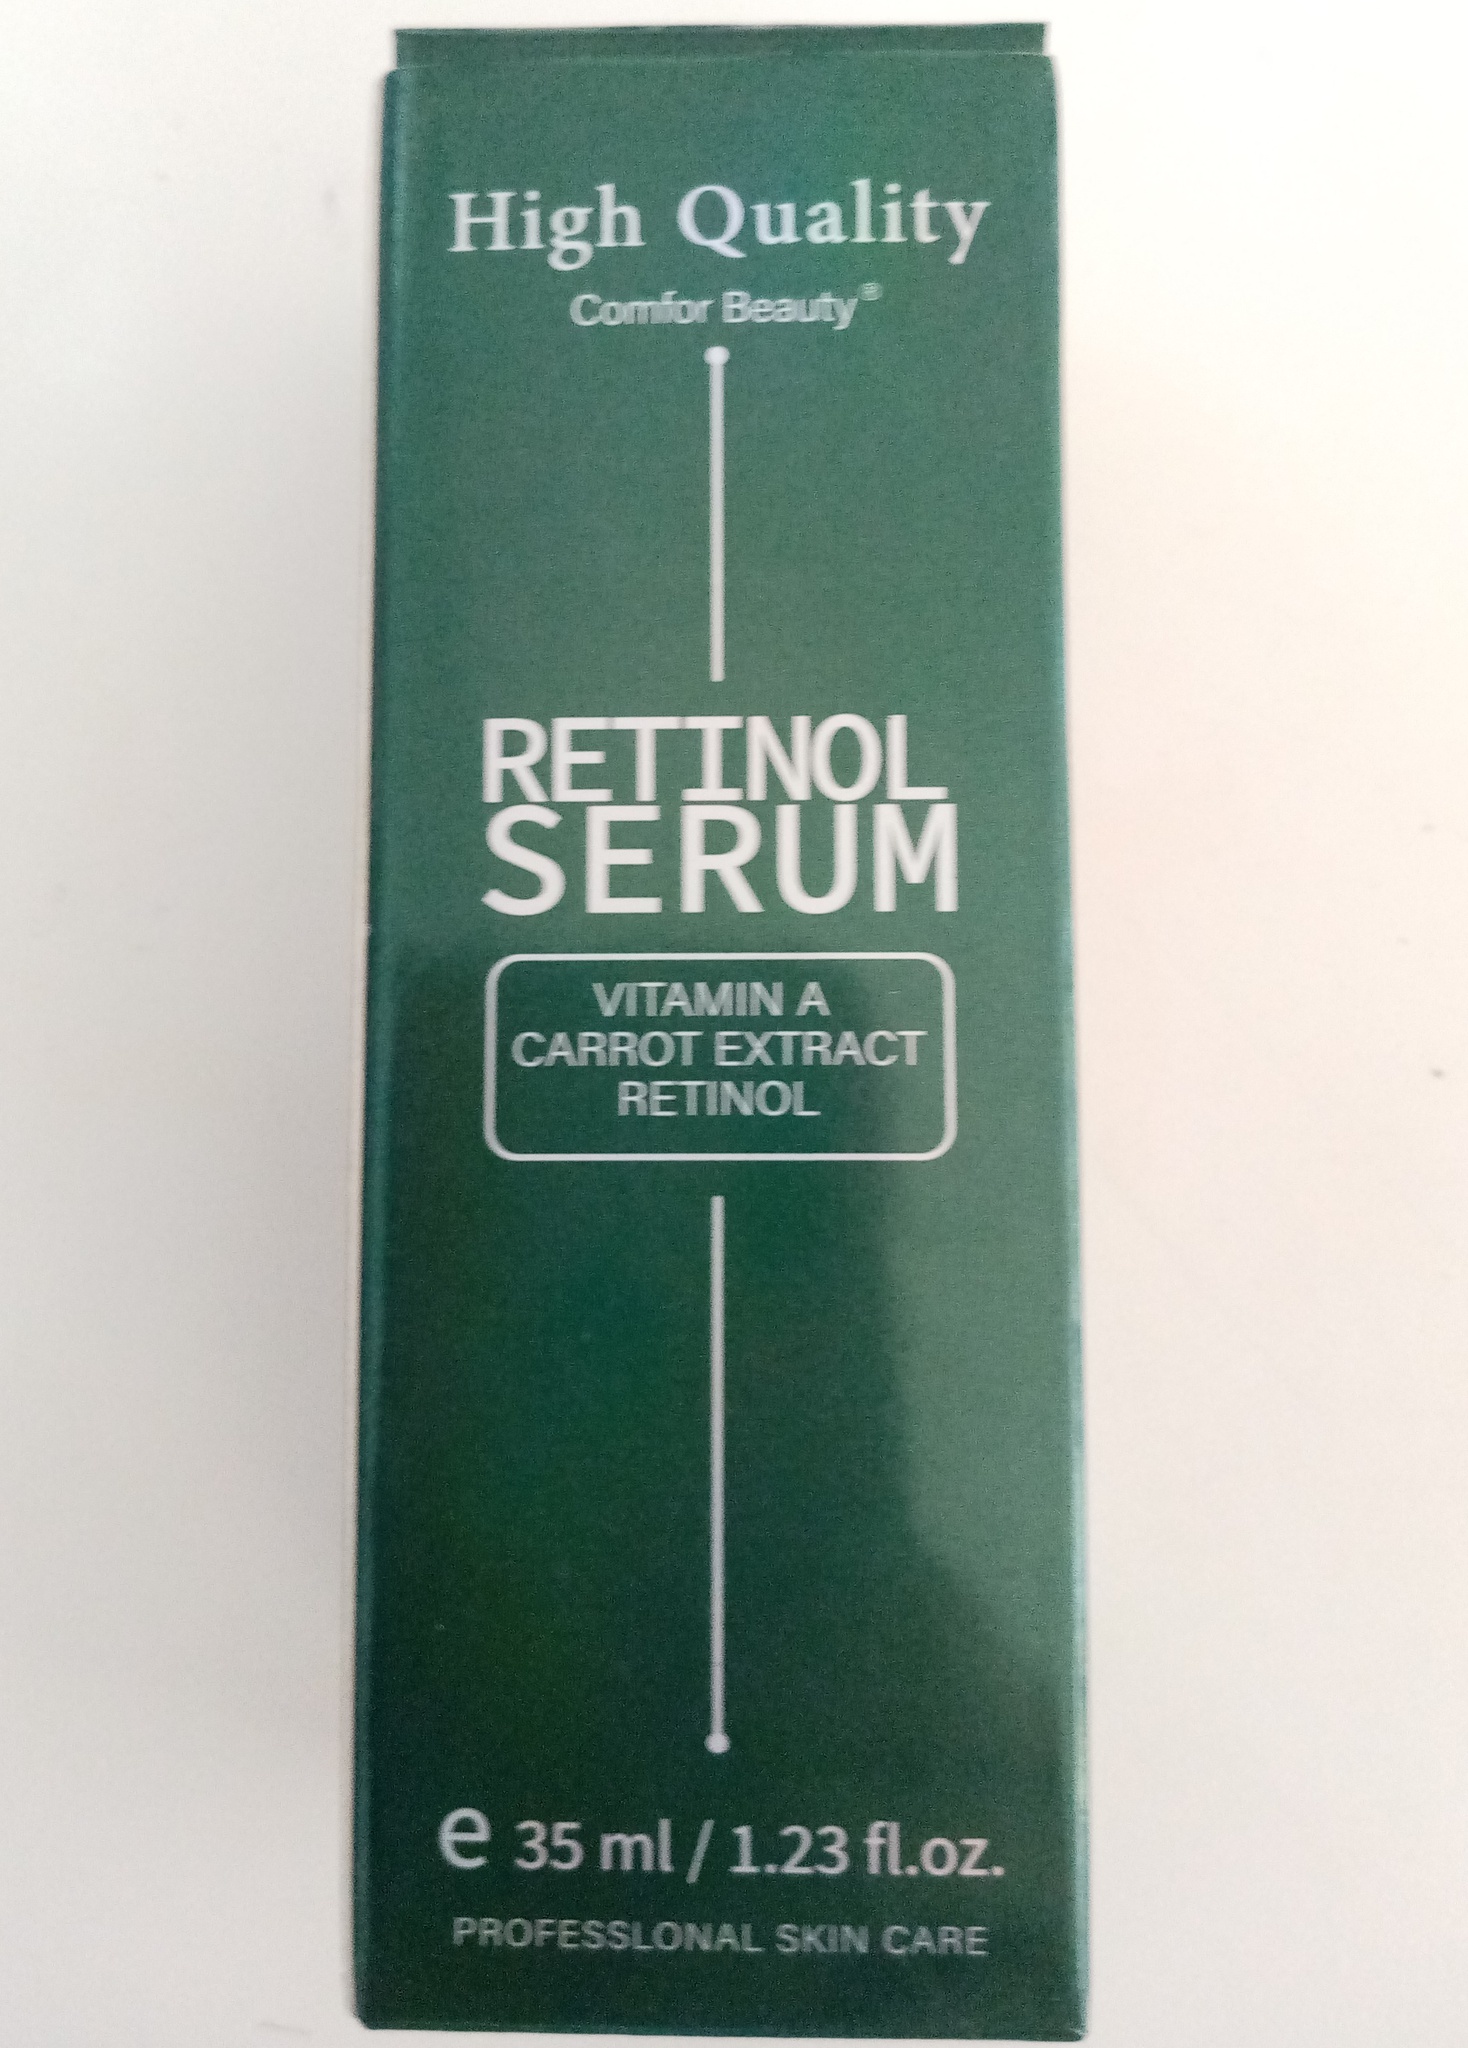 High Quality - Comfor Beauty Retinol Serum